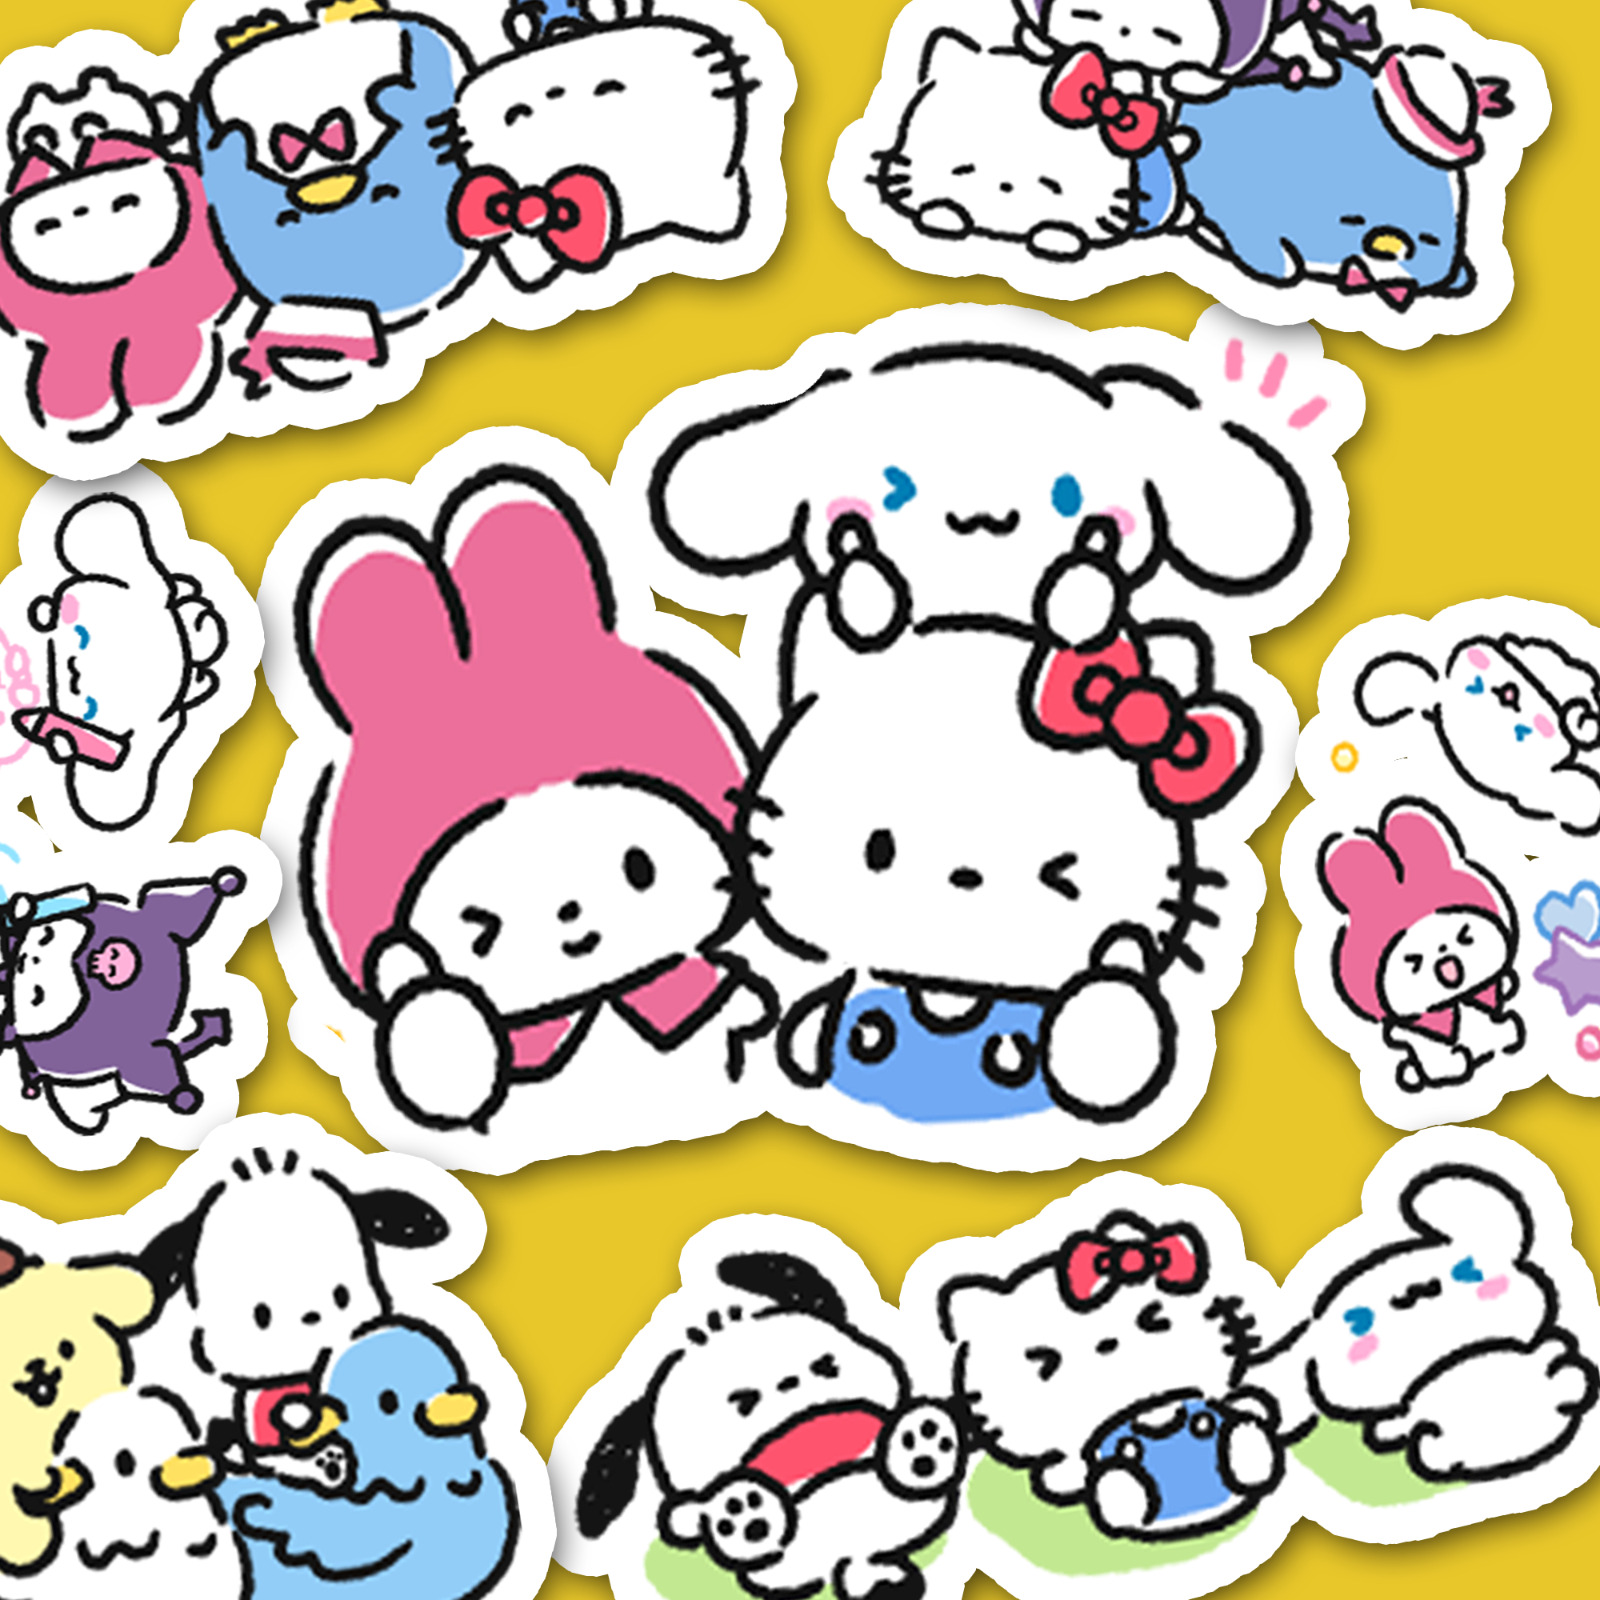 24 Sanrio Family Stickers, Journal Stickers, Kawaii Stickers